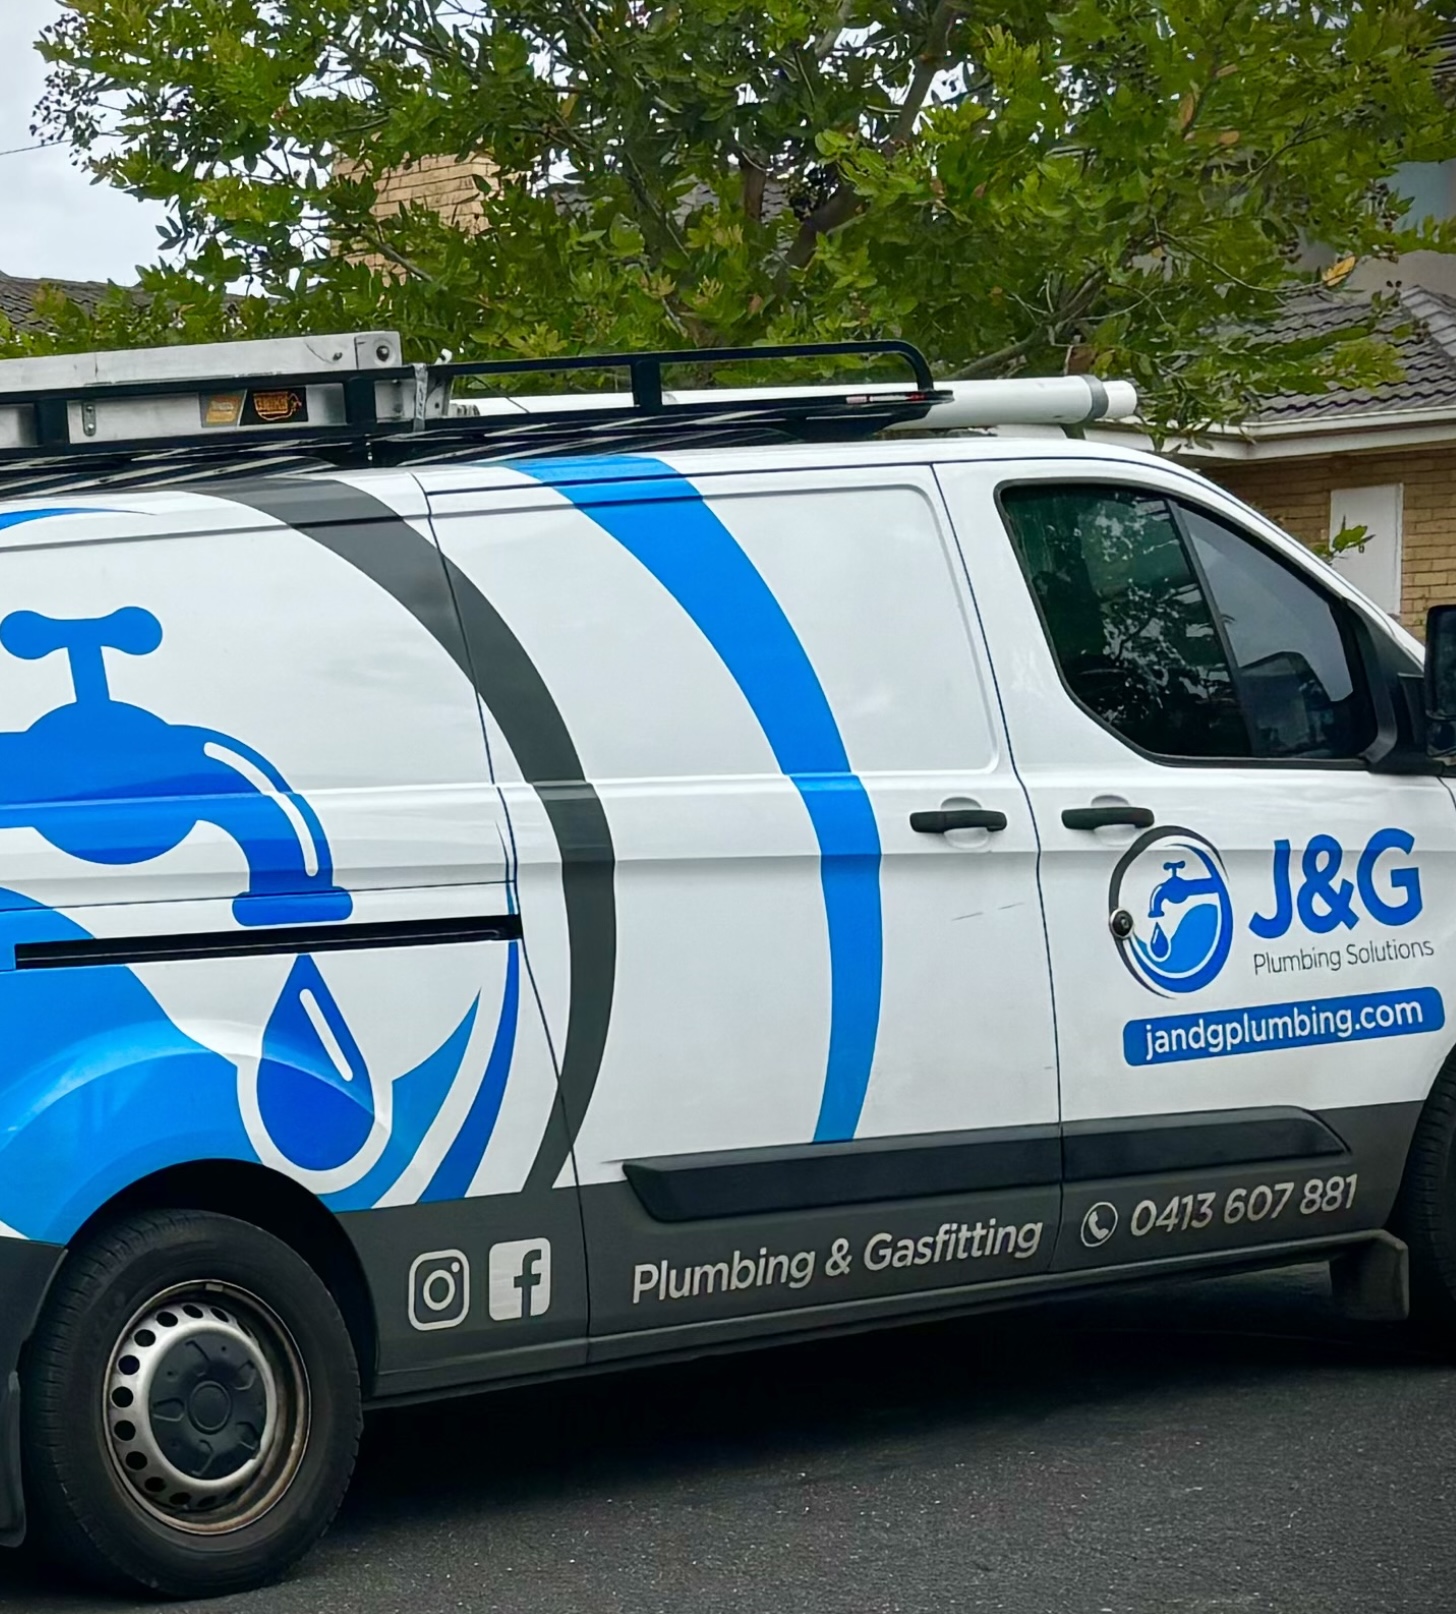 J&G plumbing Solutions plumbing van parked outside a house in Templestowe